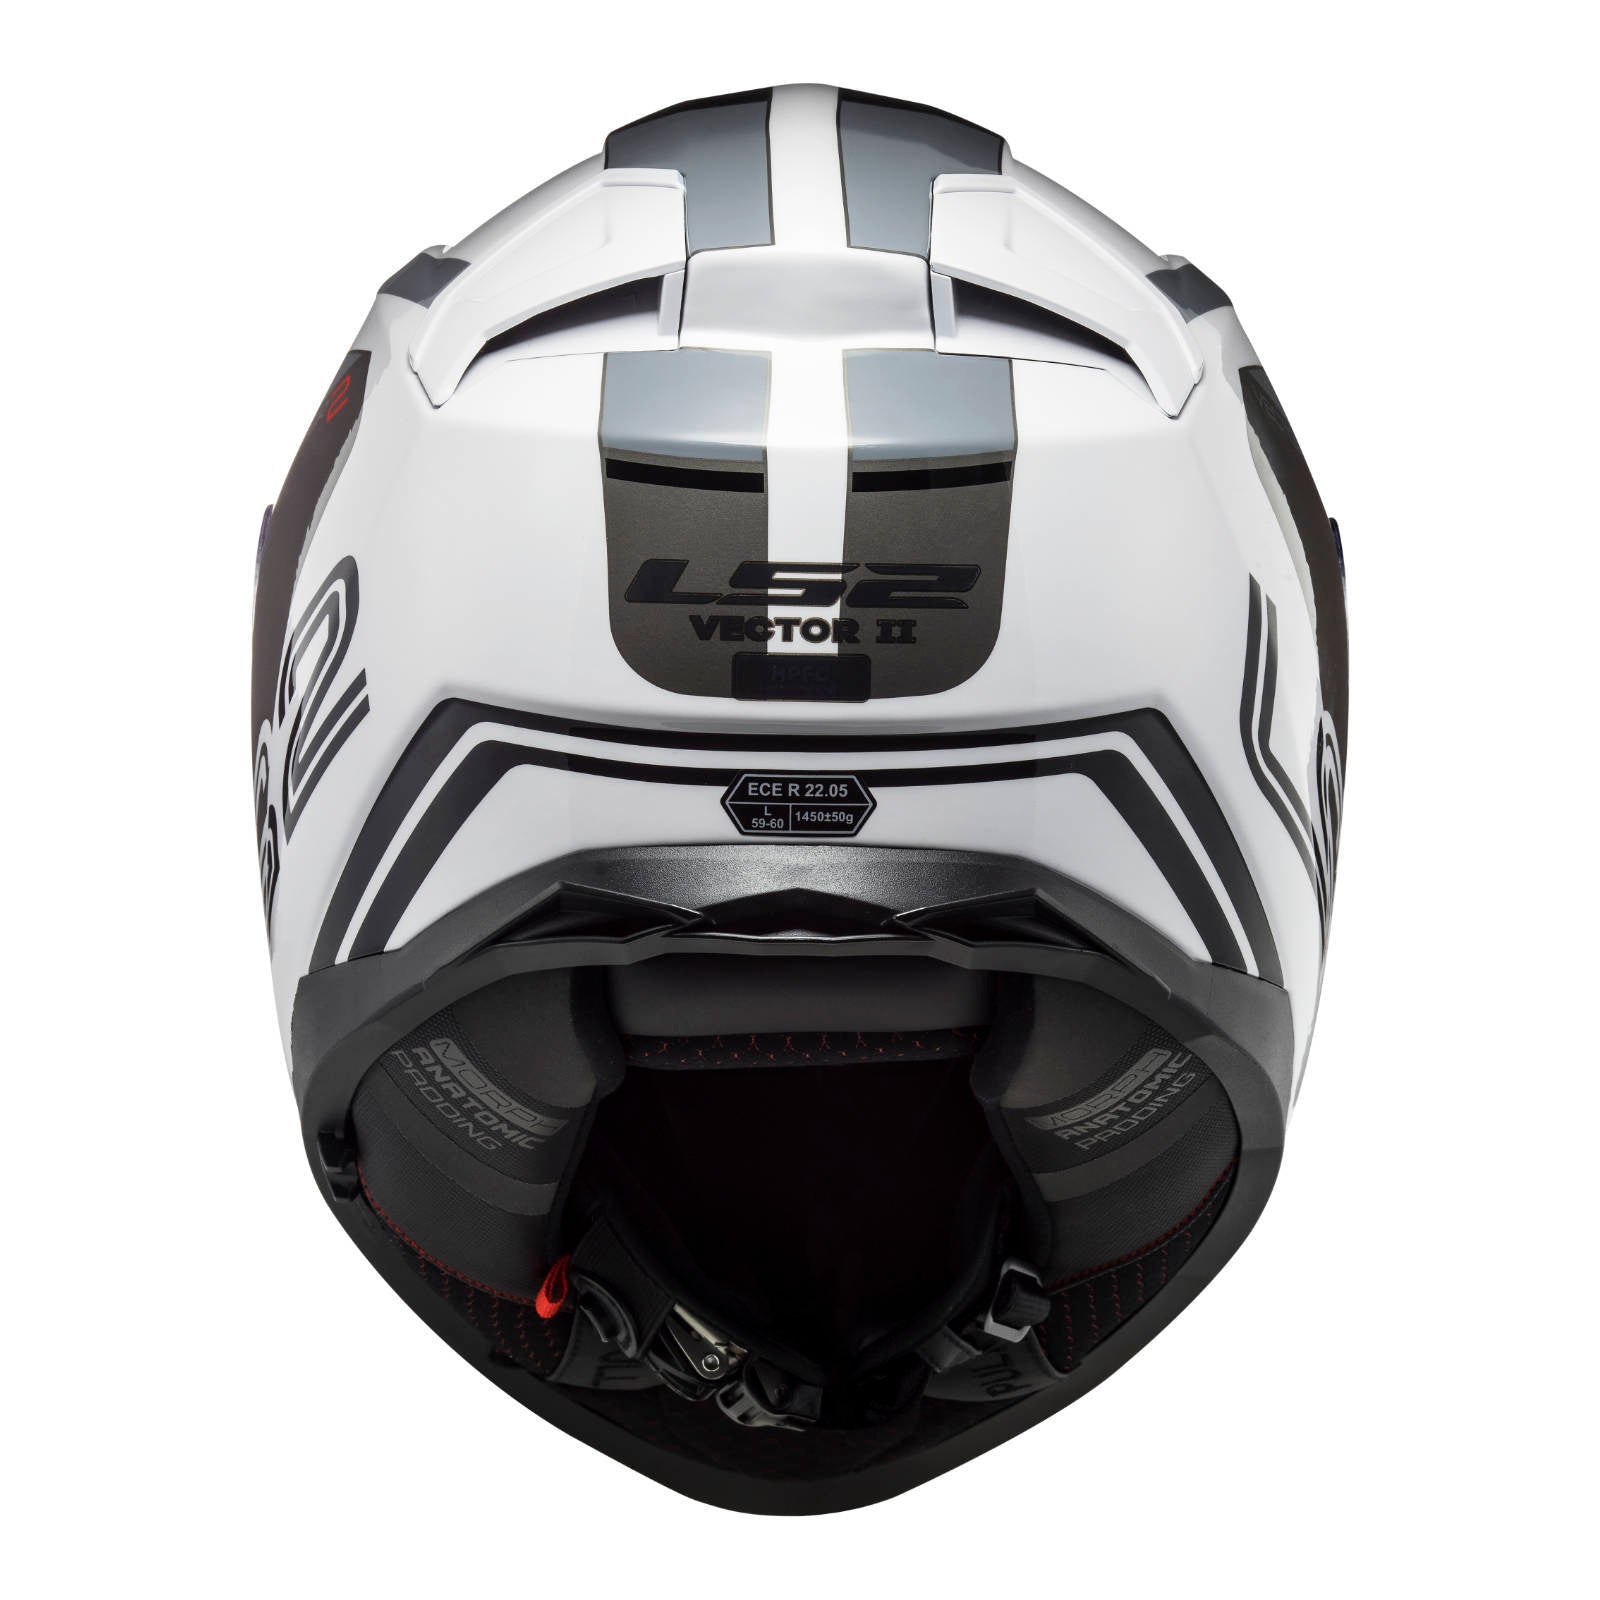 LS2 FF811 Vector II Metric Helmet White / Titanium / Silver